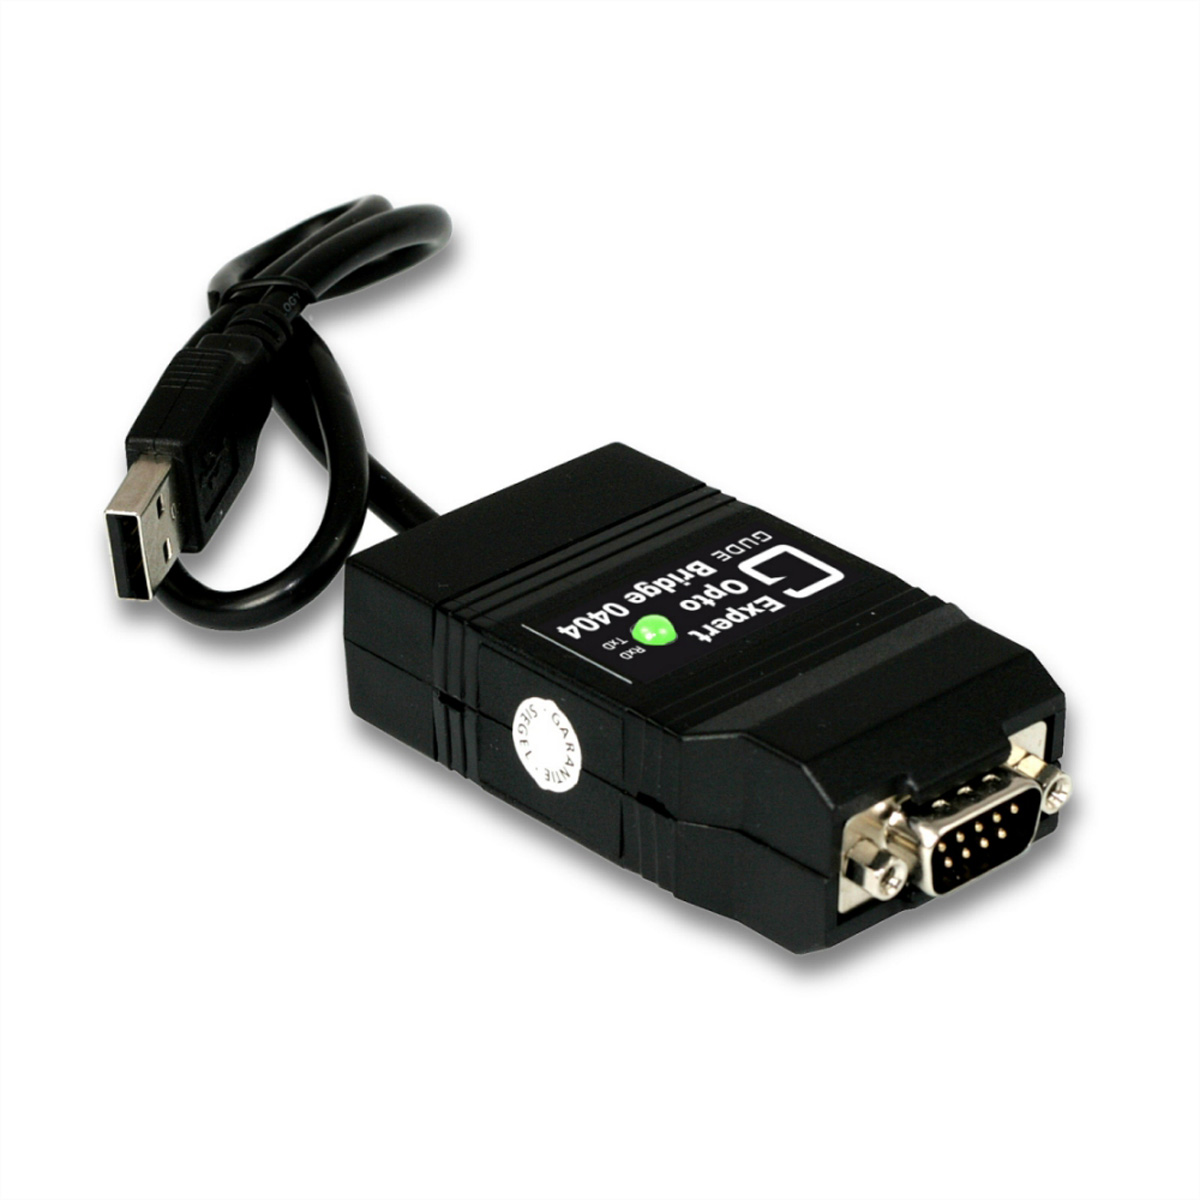 GUDE 0404 Opto Bridge USB-RS232